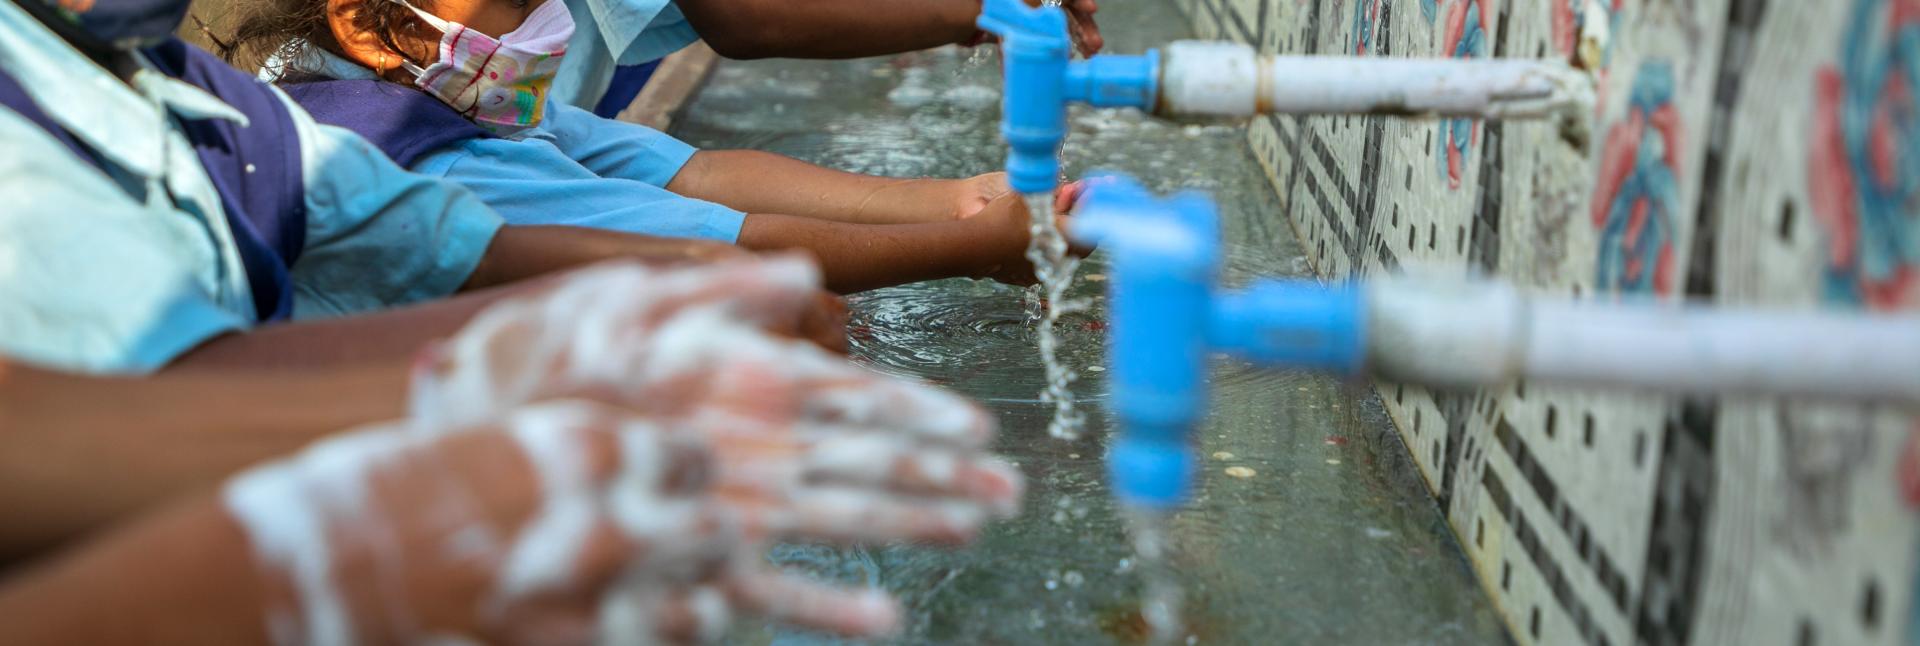 school kids using hand washing facilities